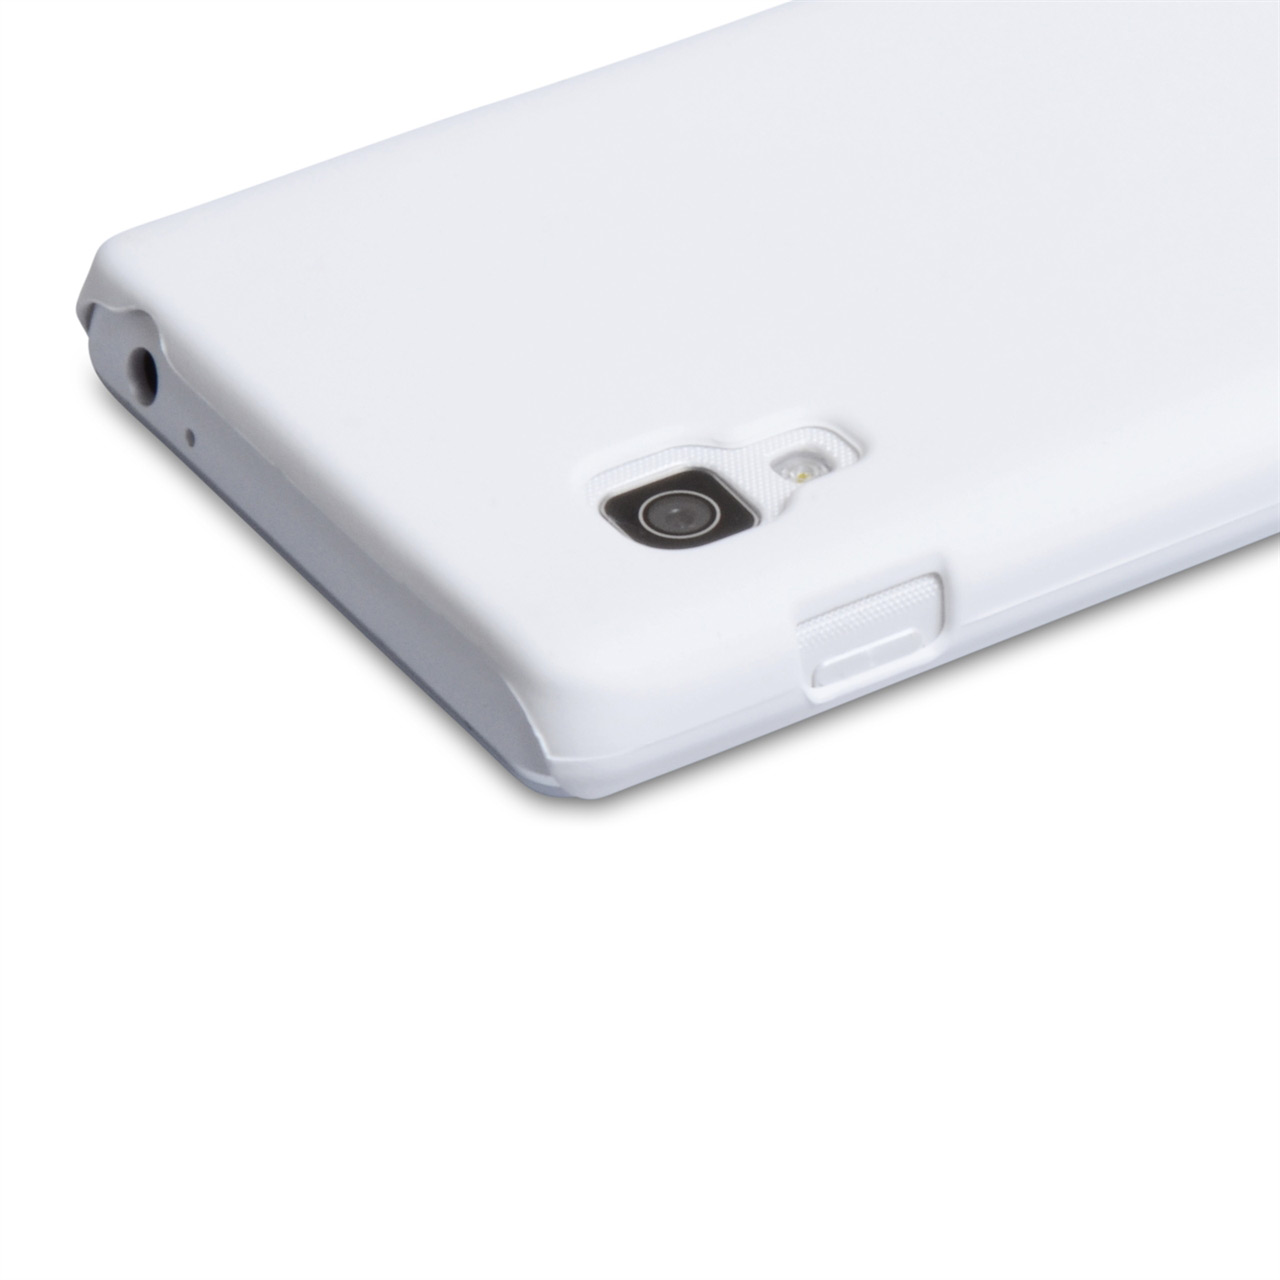 YouSave Accessories LG Optimus L5 II White Hard Hybrid Case 